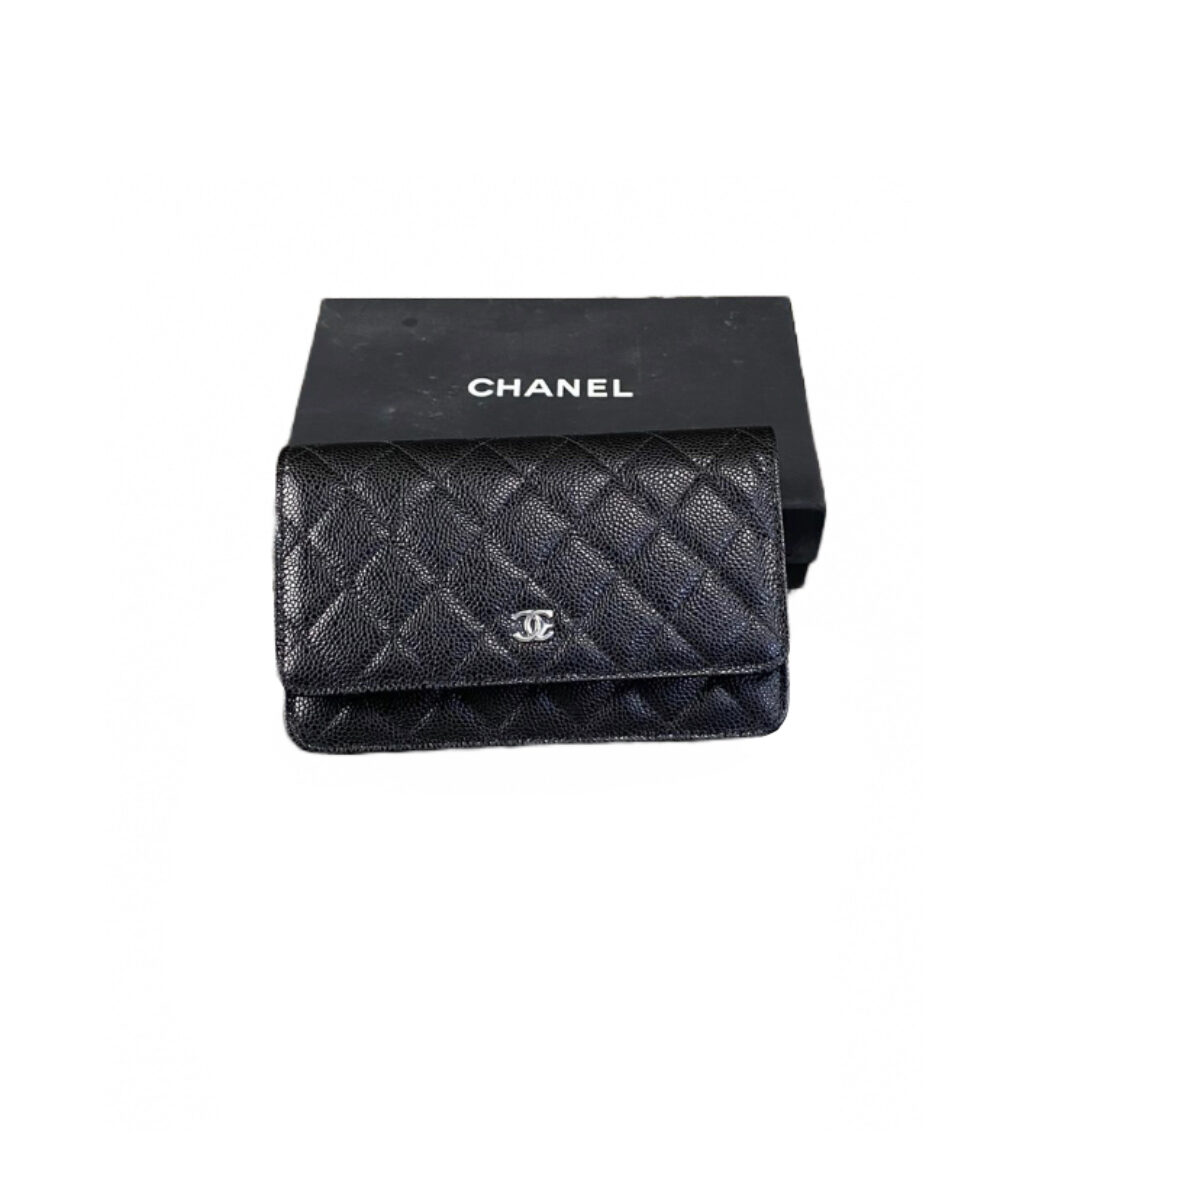 Chanel WOC Caviar Black Leather Bag SHW - Wornright Authenticated